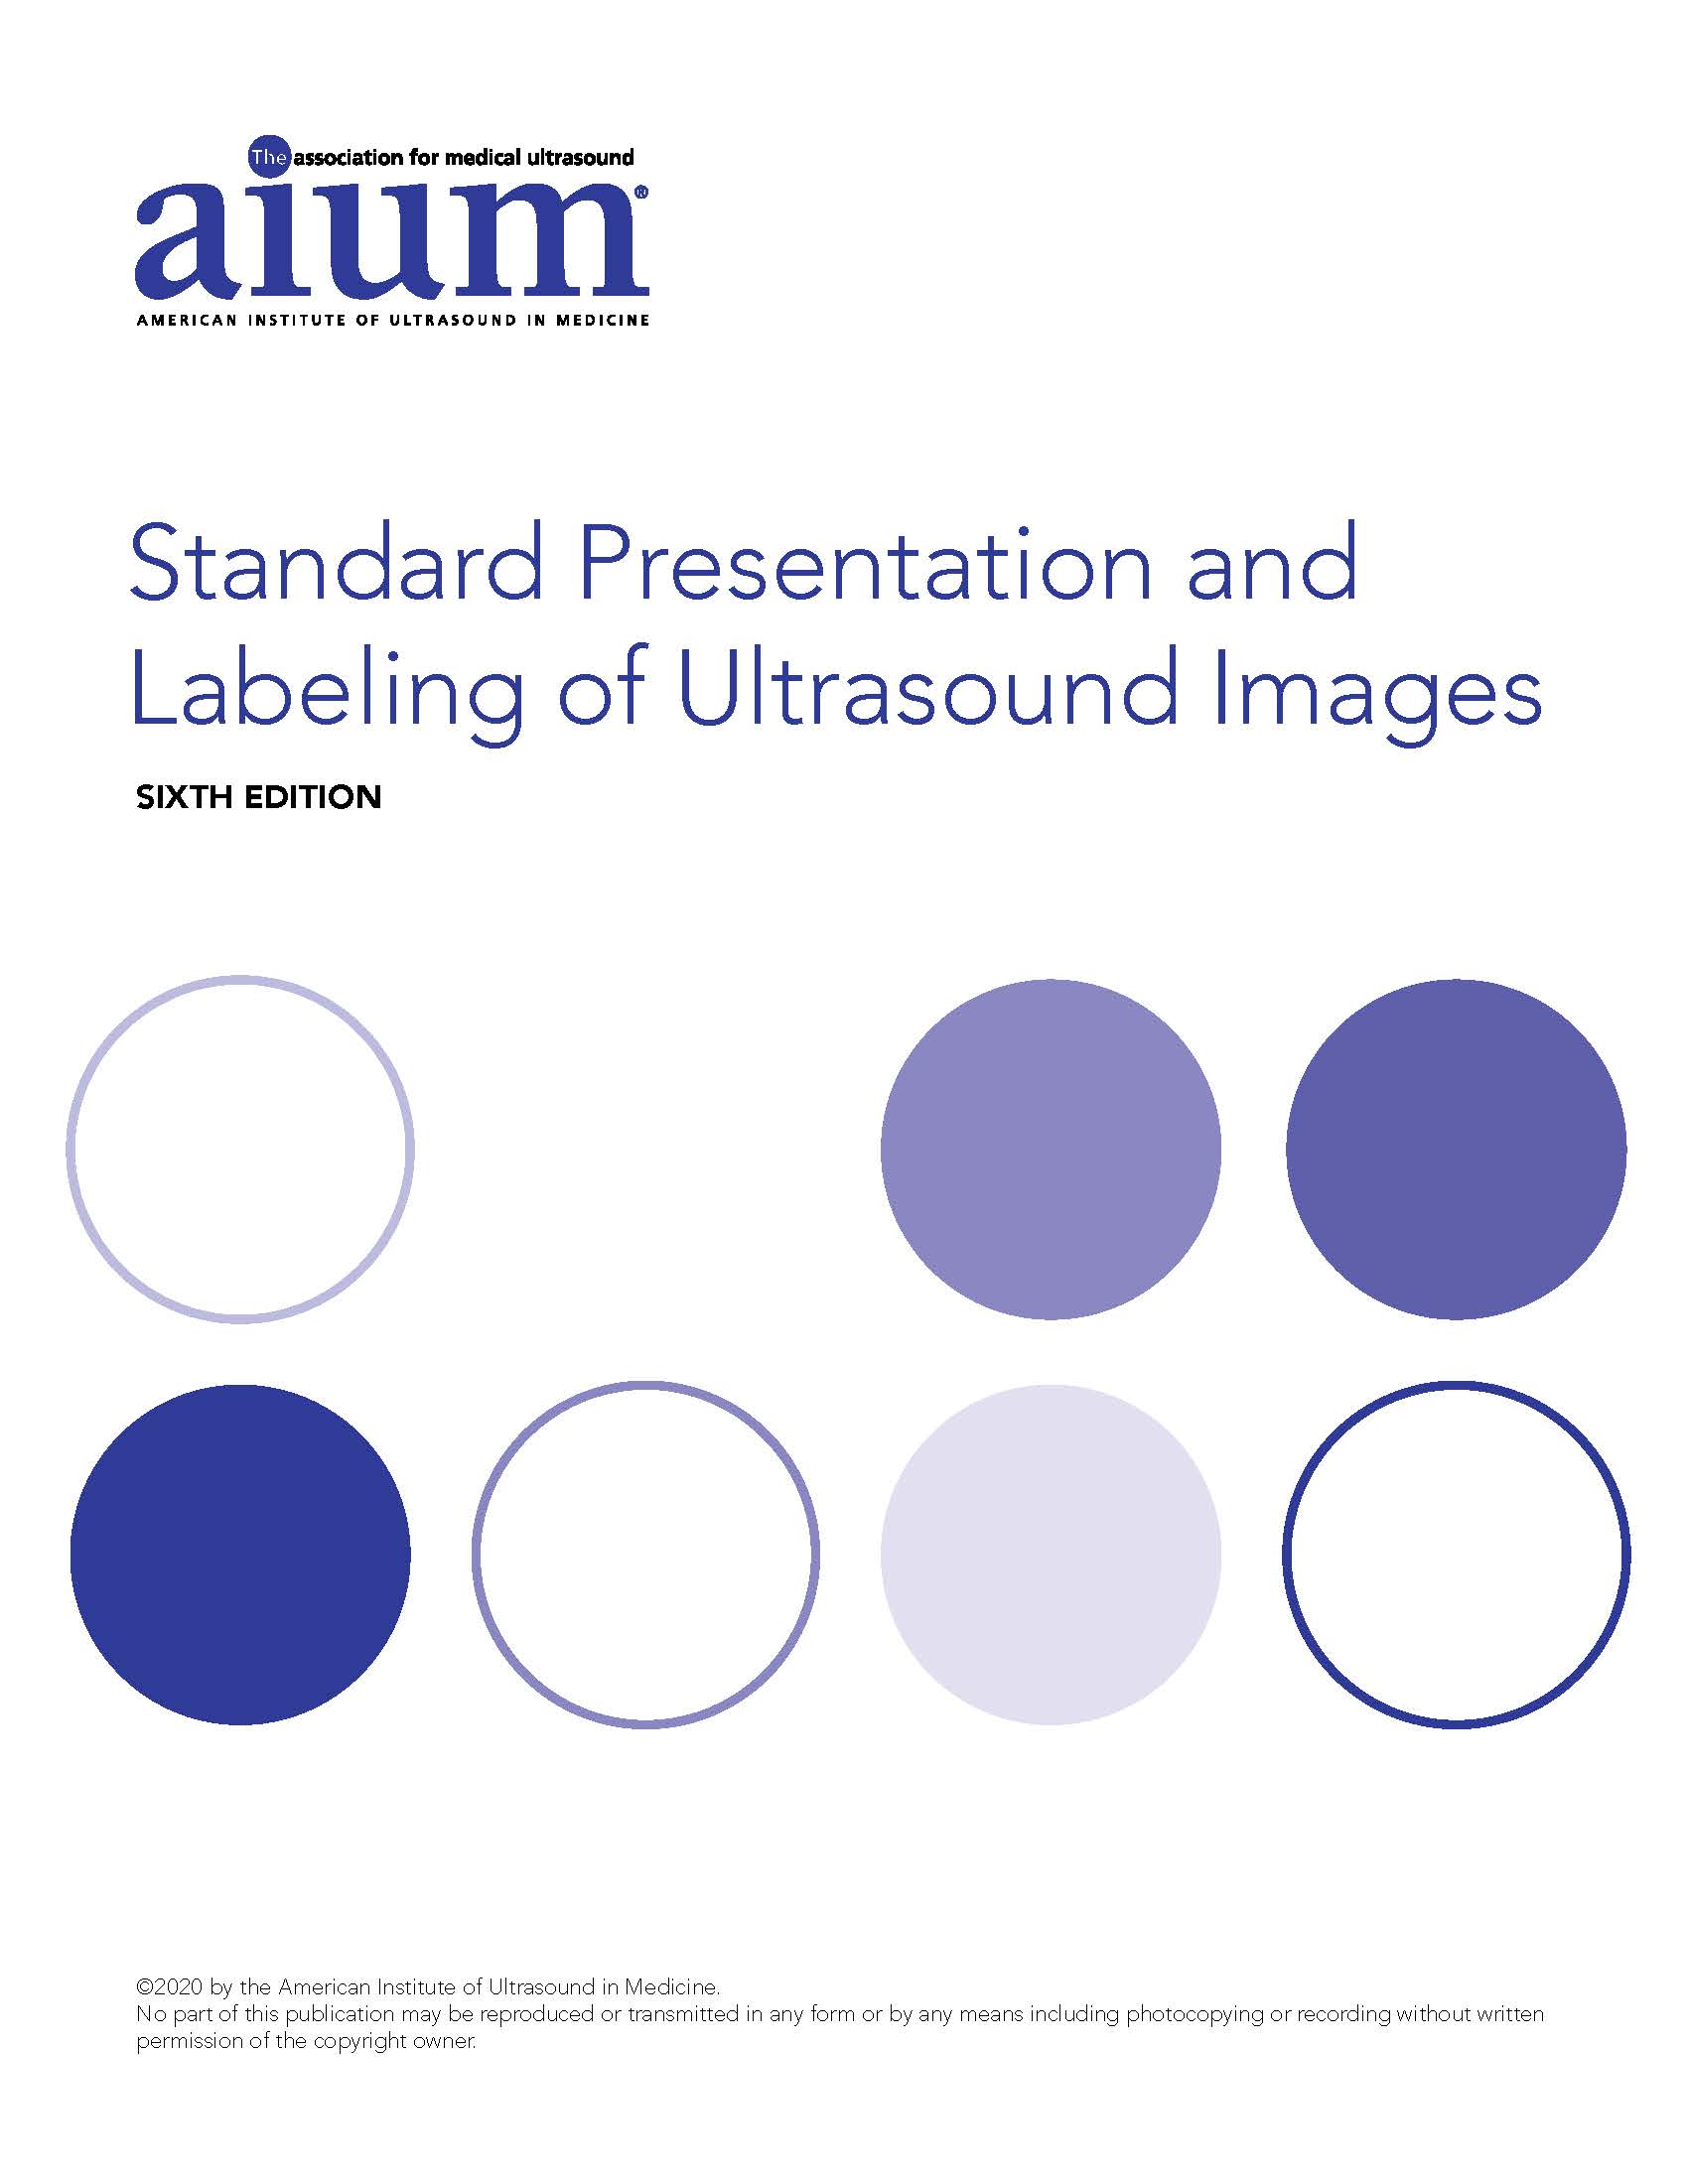 Standard Presentation and Labeling of Ultrasound Images